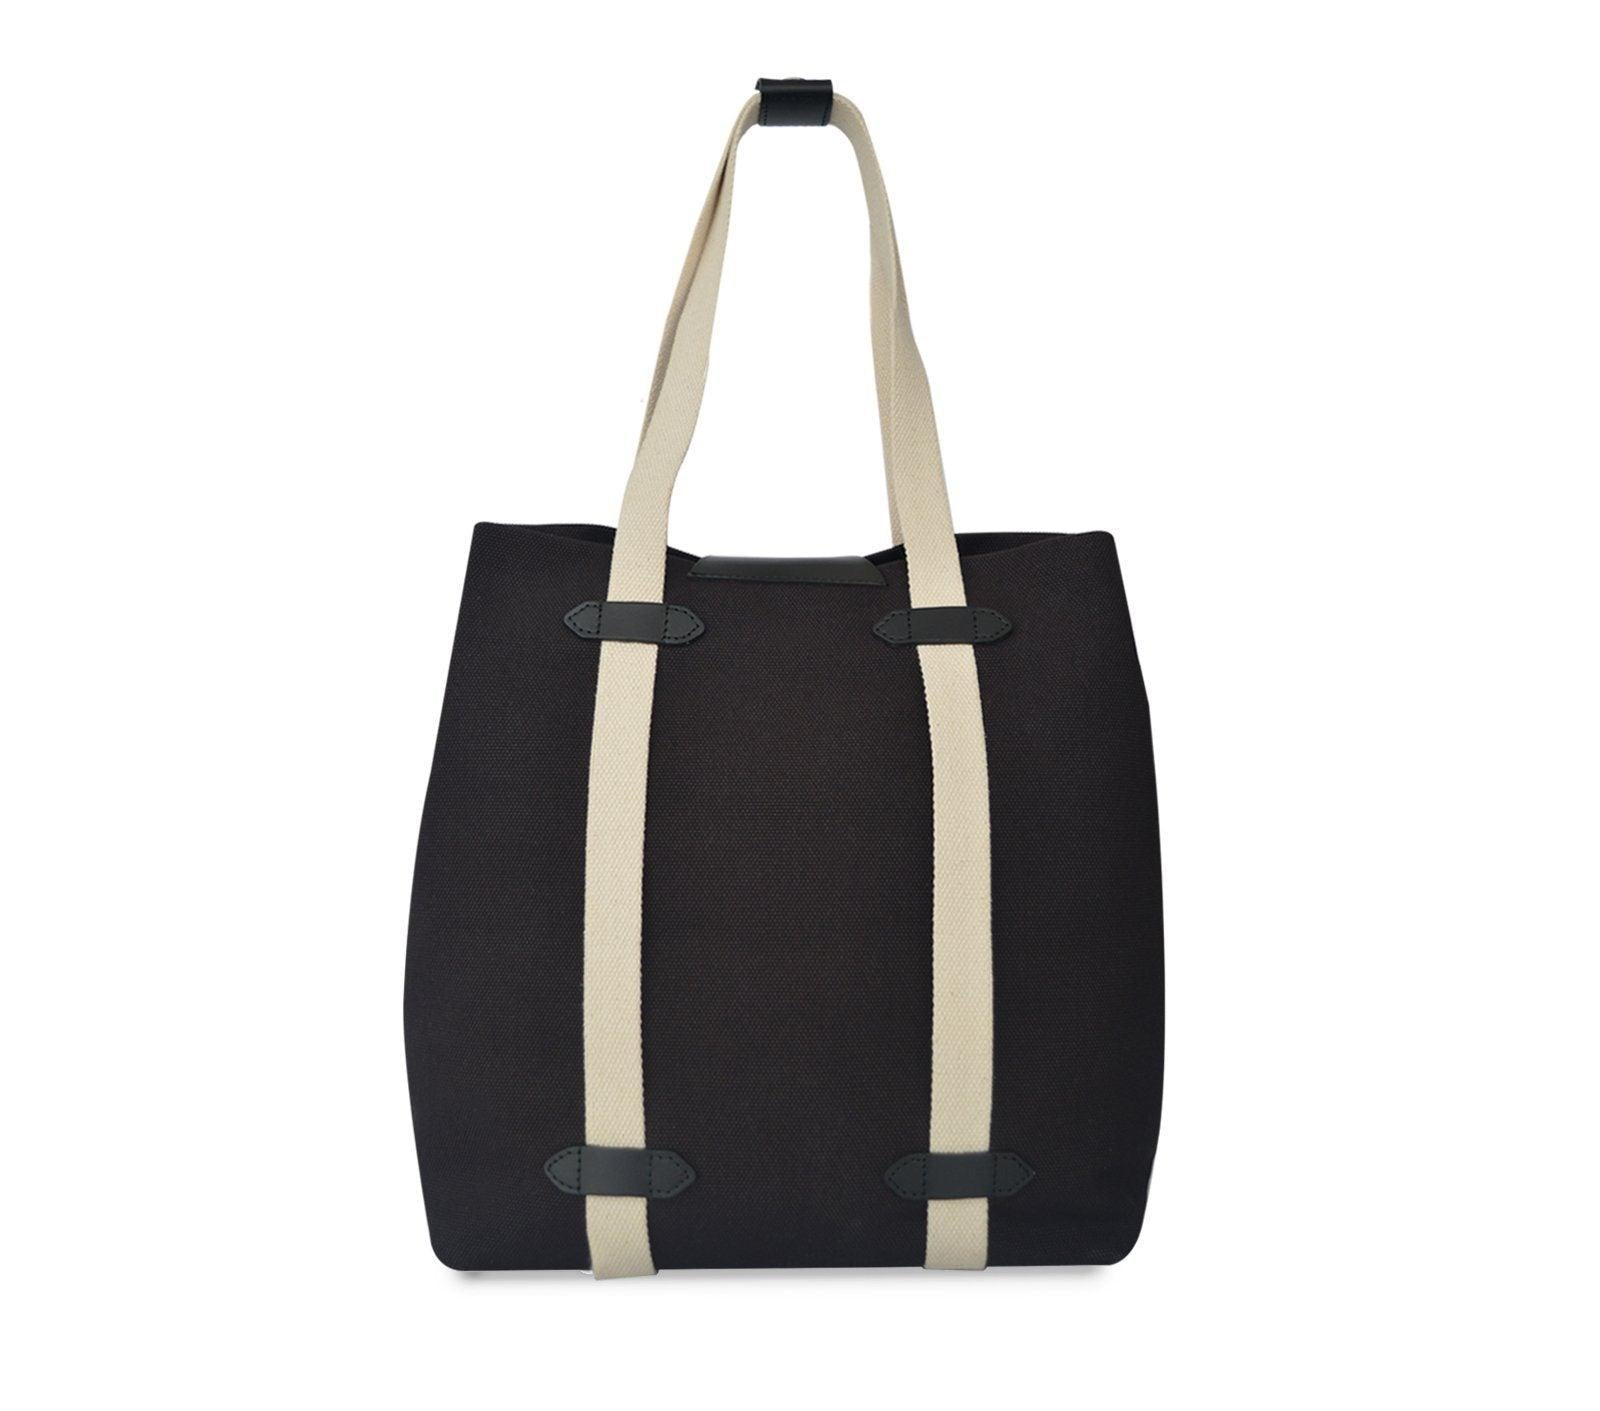 Buy Nicoberry Women's Shoulder Bag | Big size, Handbag with 100% Vegan  Leather (Pink) at Amazon.in